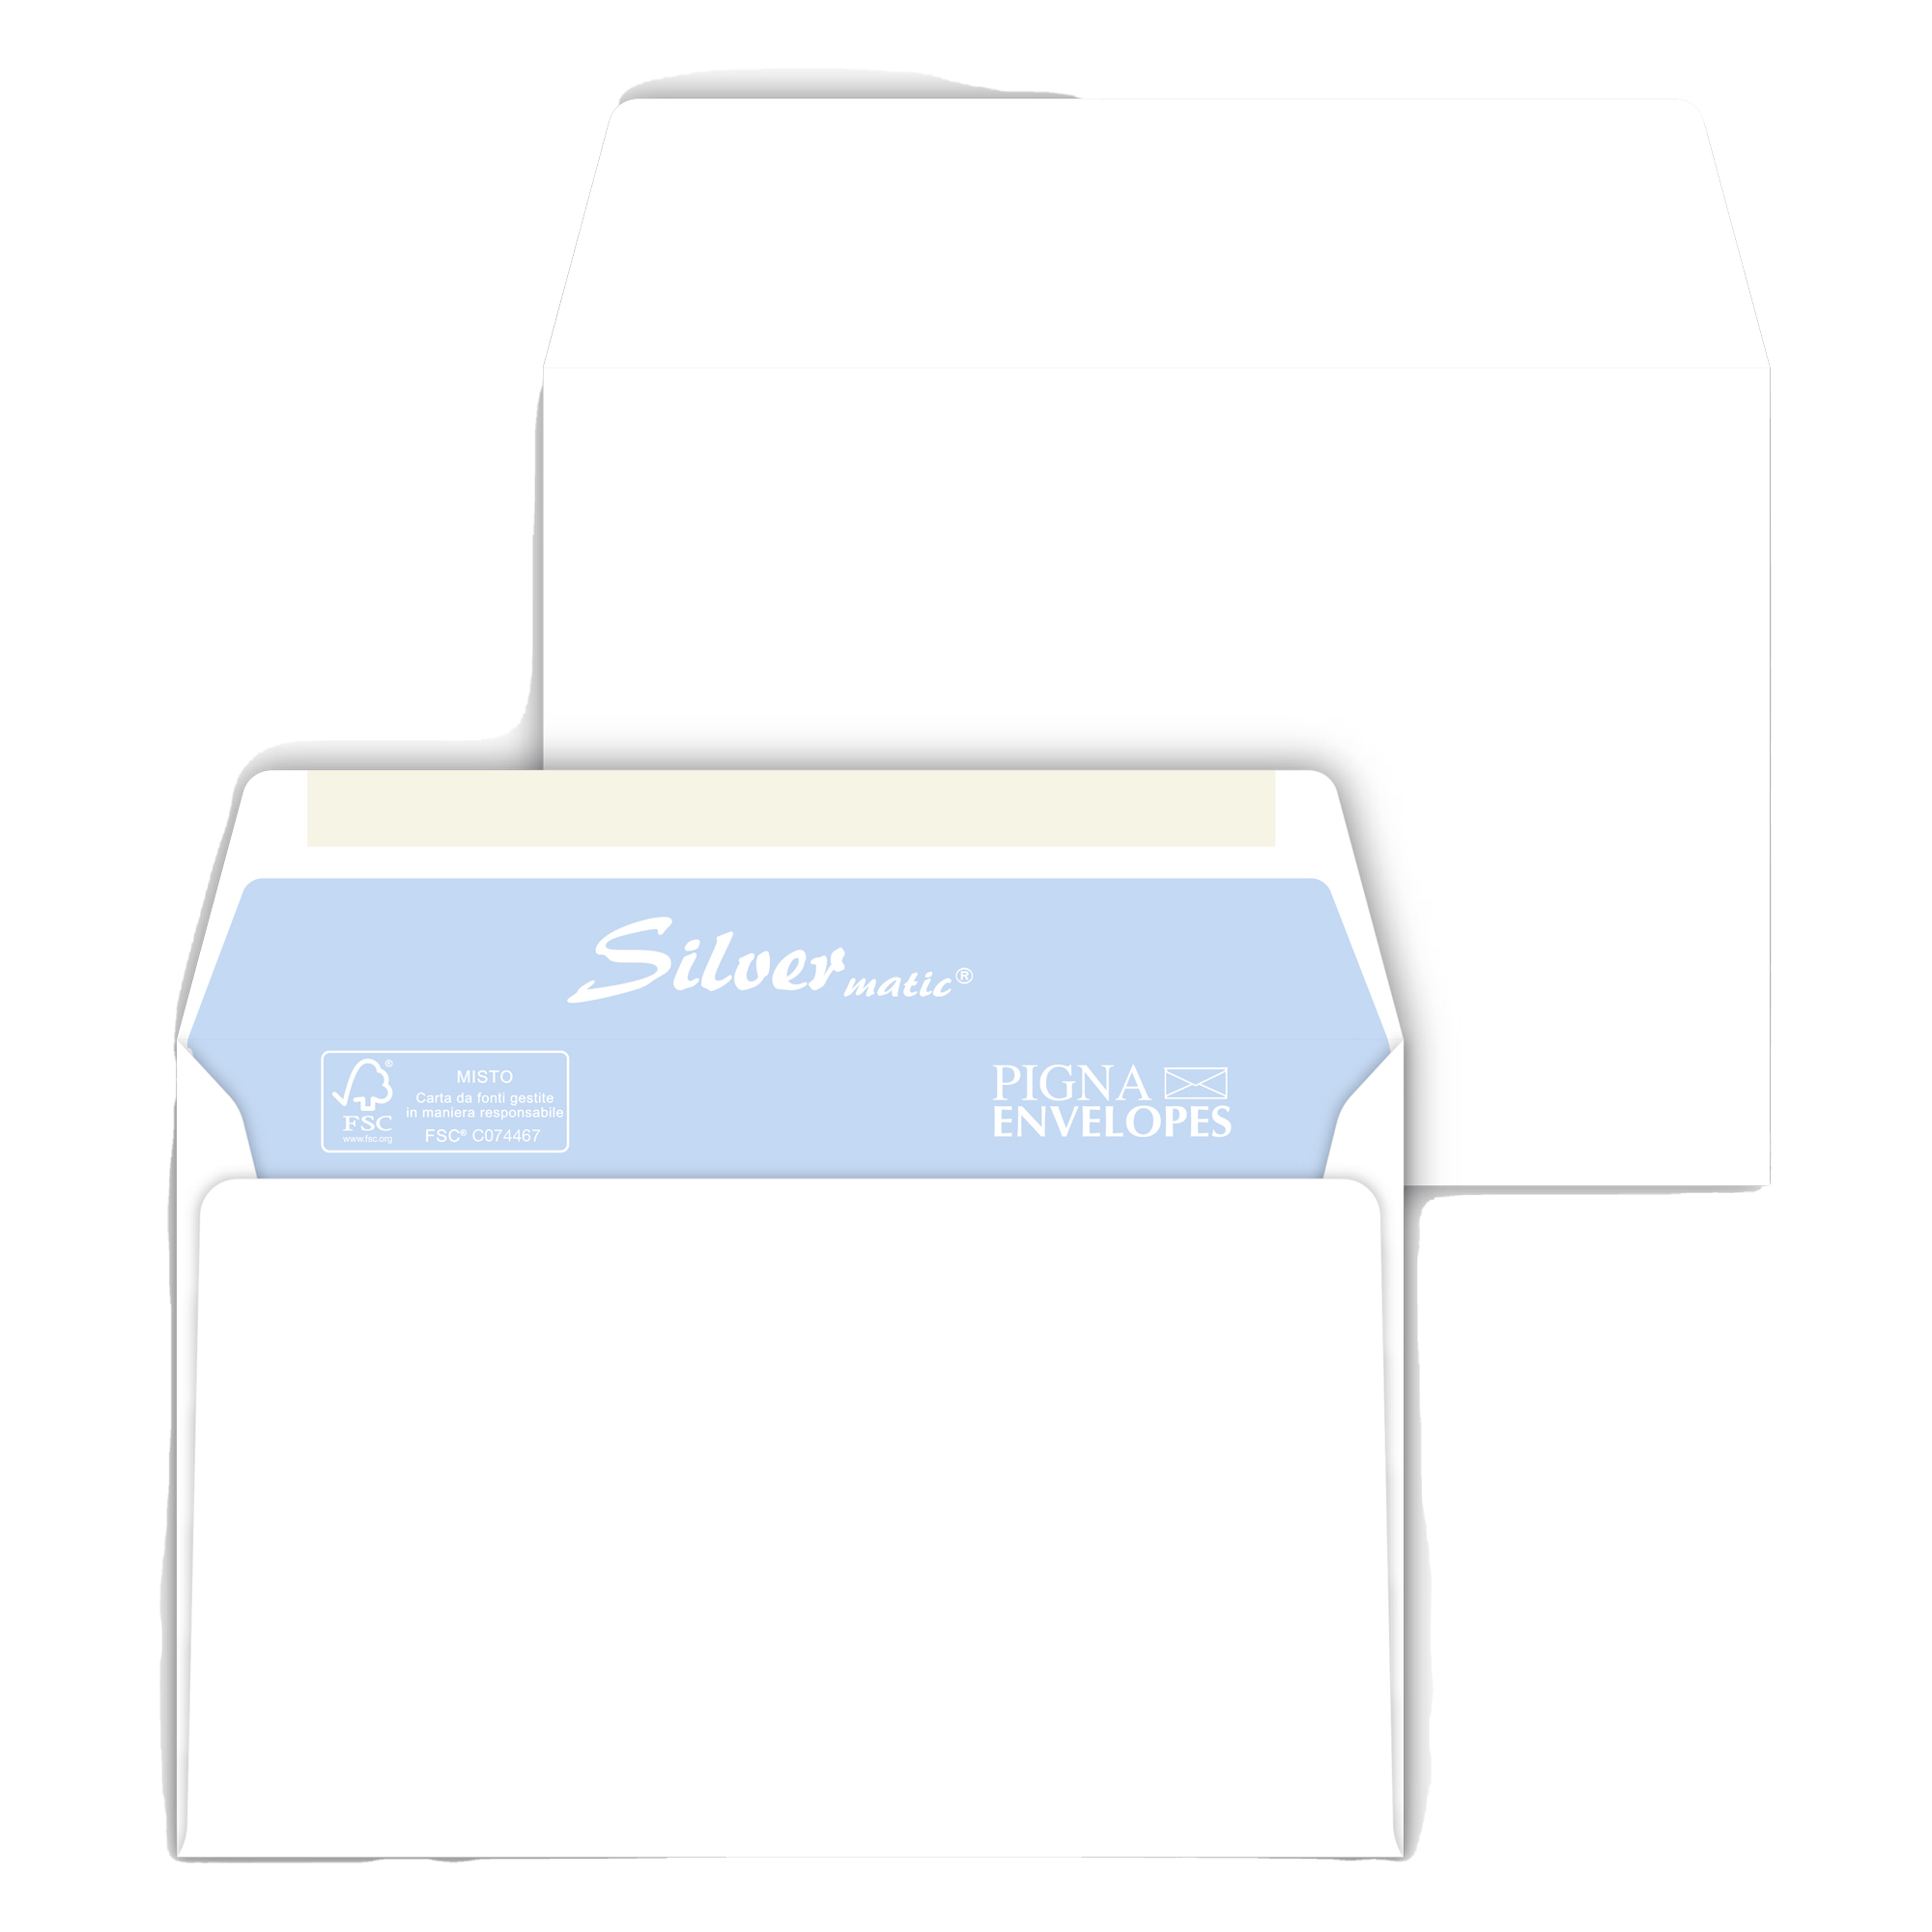 Busta SILVER MATIC FSC  - gommata - bianca - senza finestra - 120 x 180 mm - 70 gr - Pigna - conf. 500 pezzi